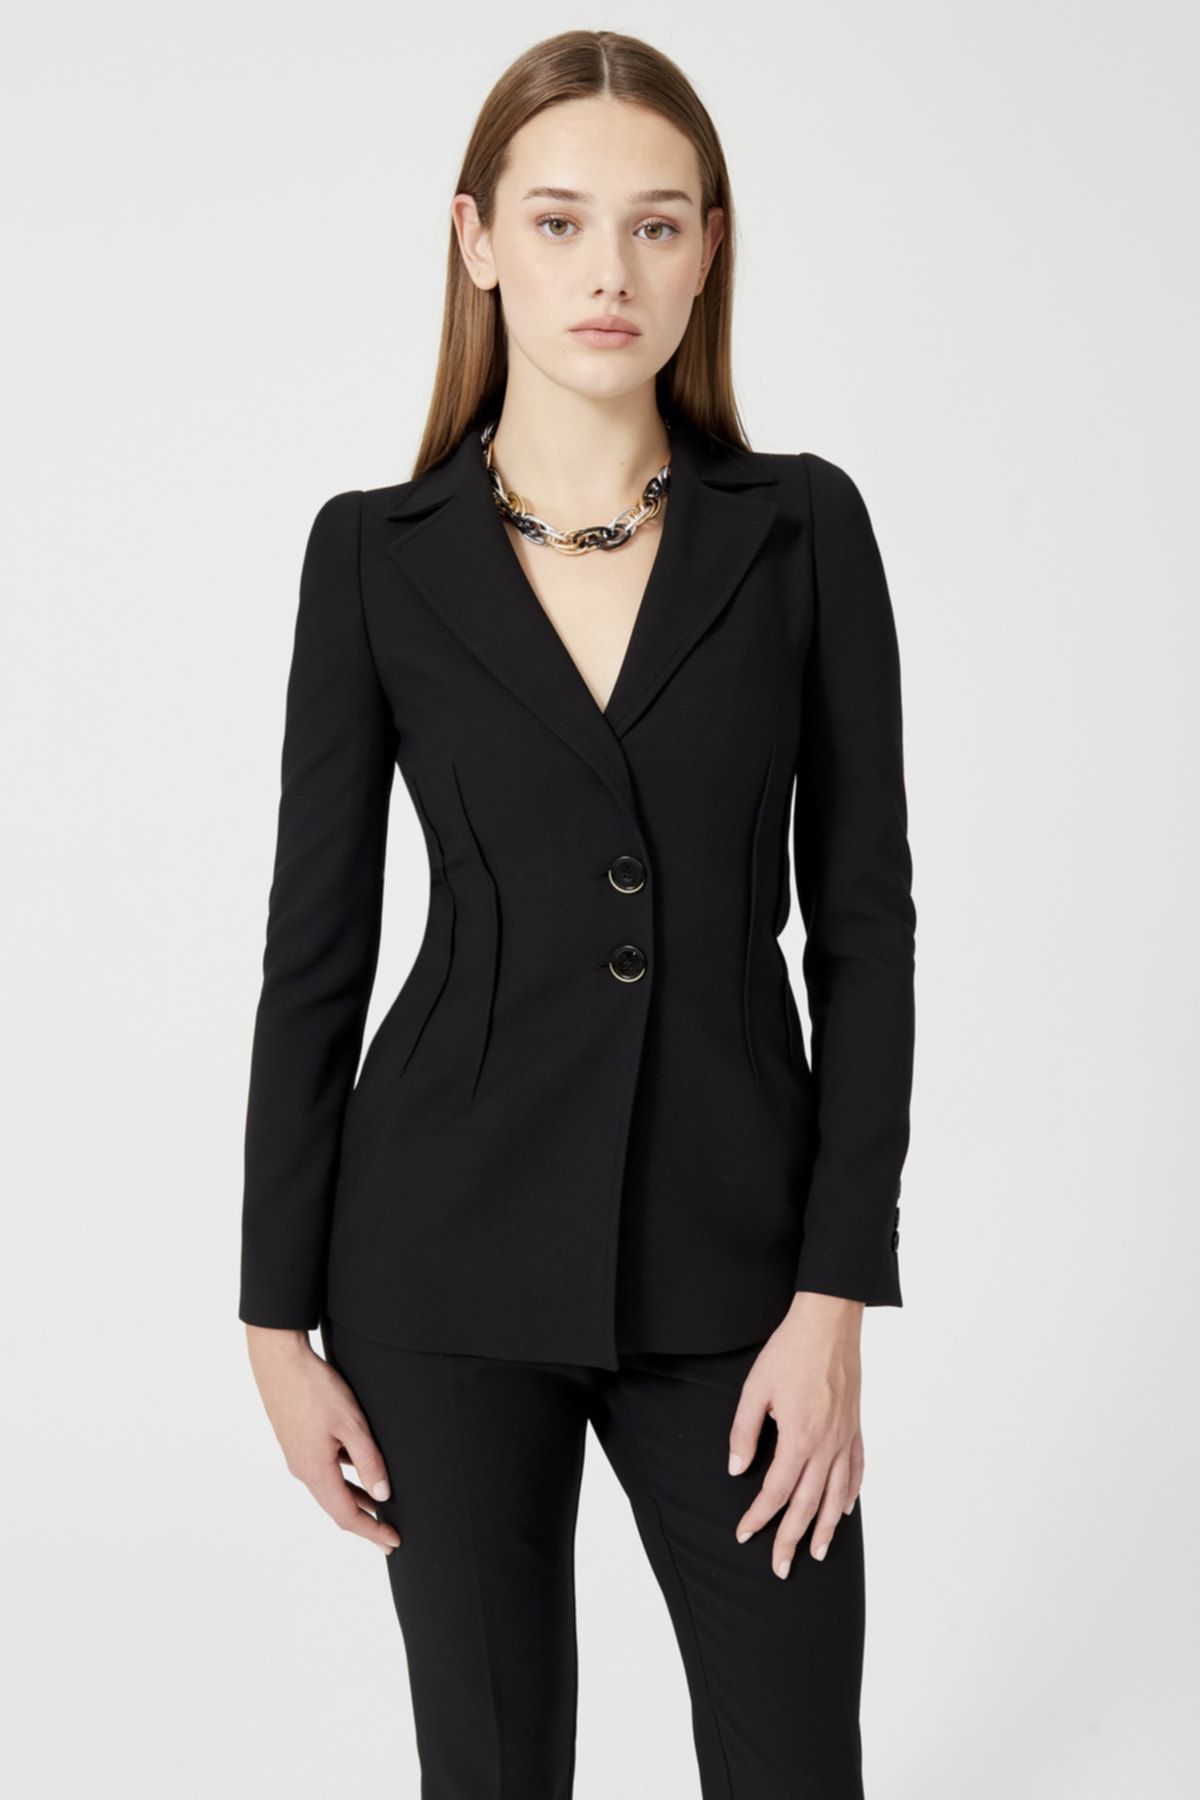 کت زنانه رسمی شیک دو دکمه مشکی برند آدله ای دی ال Adl